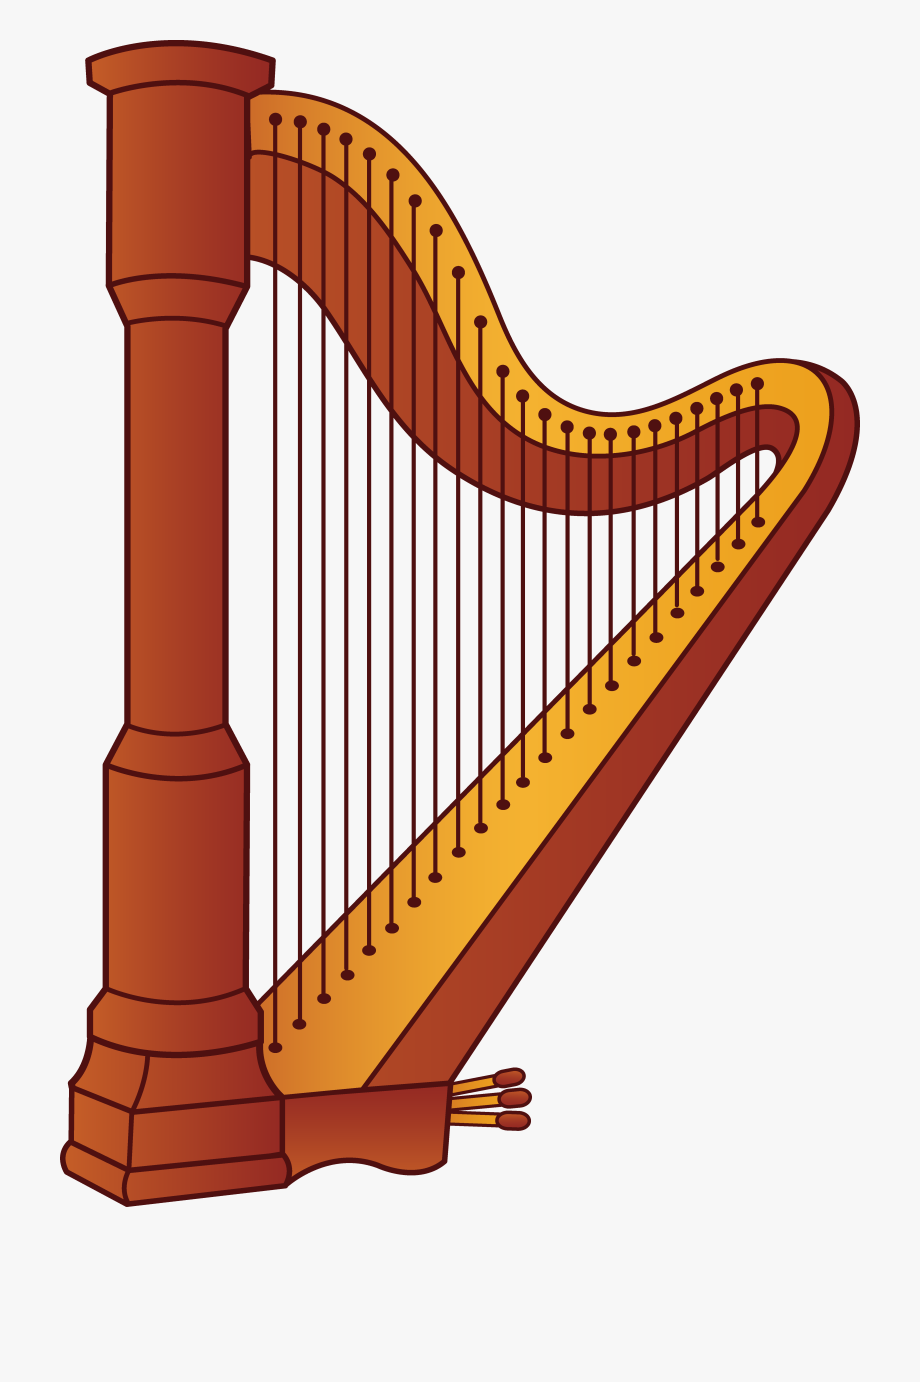 harp clipart classical instrument